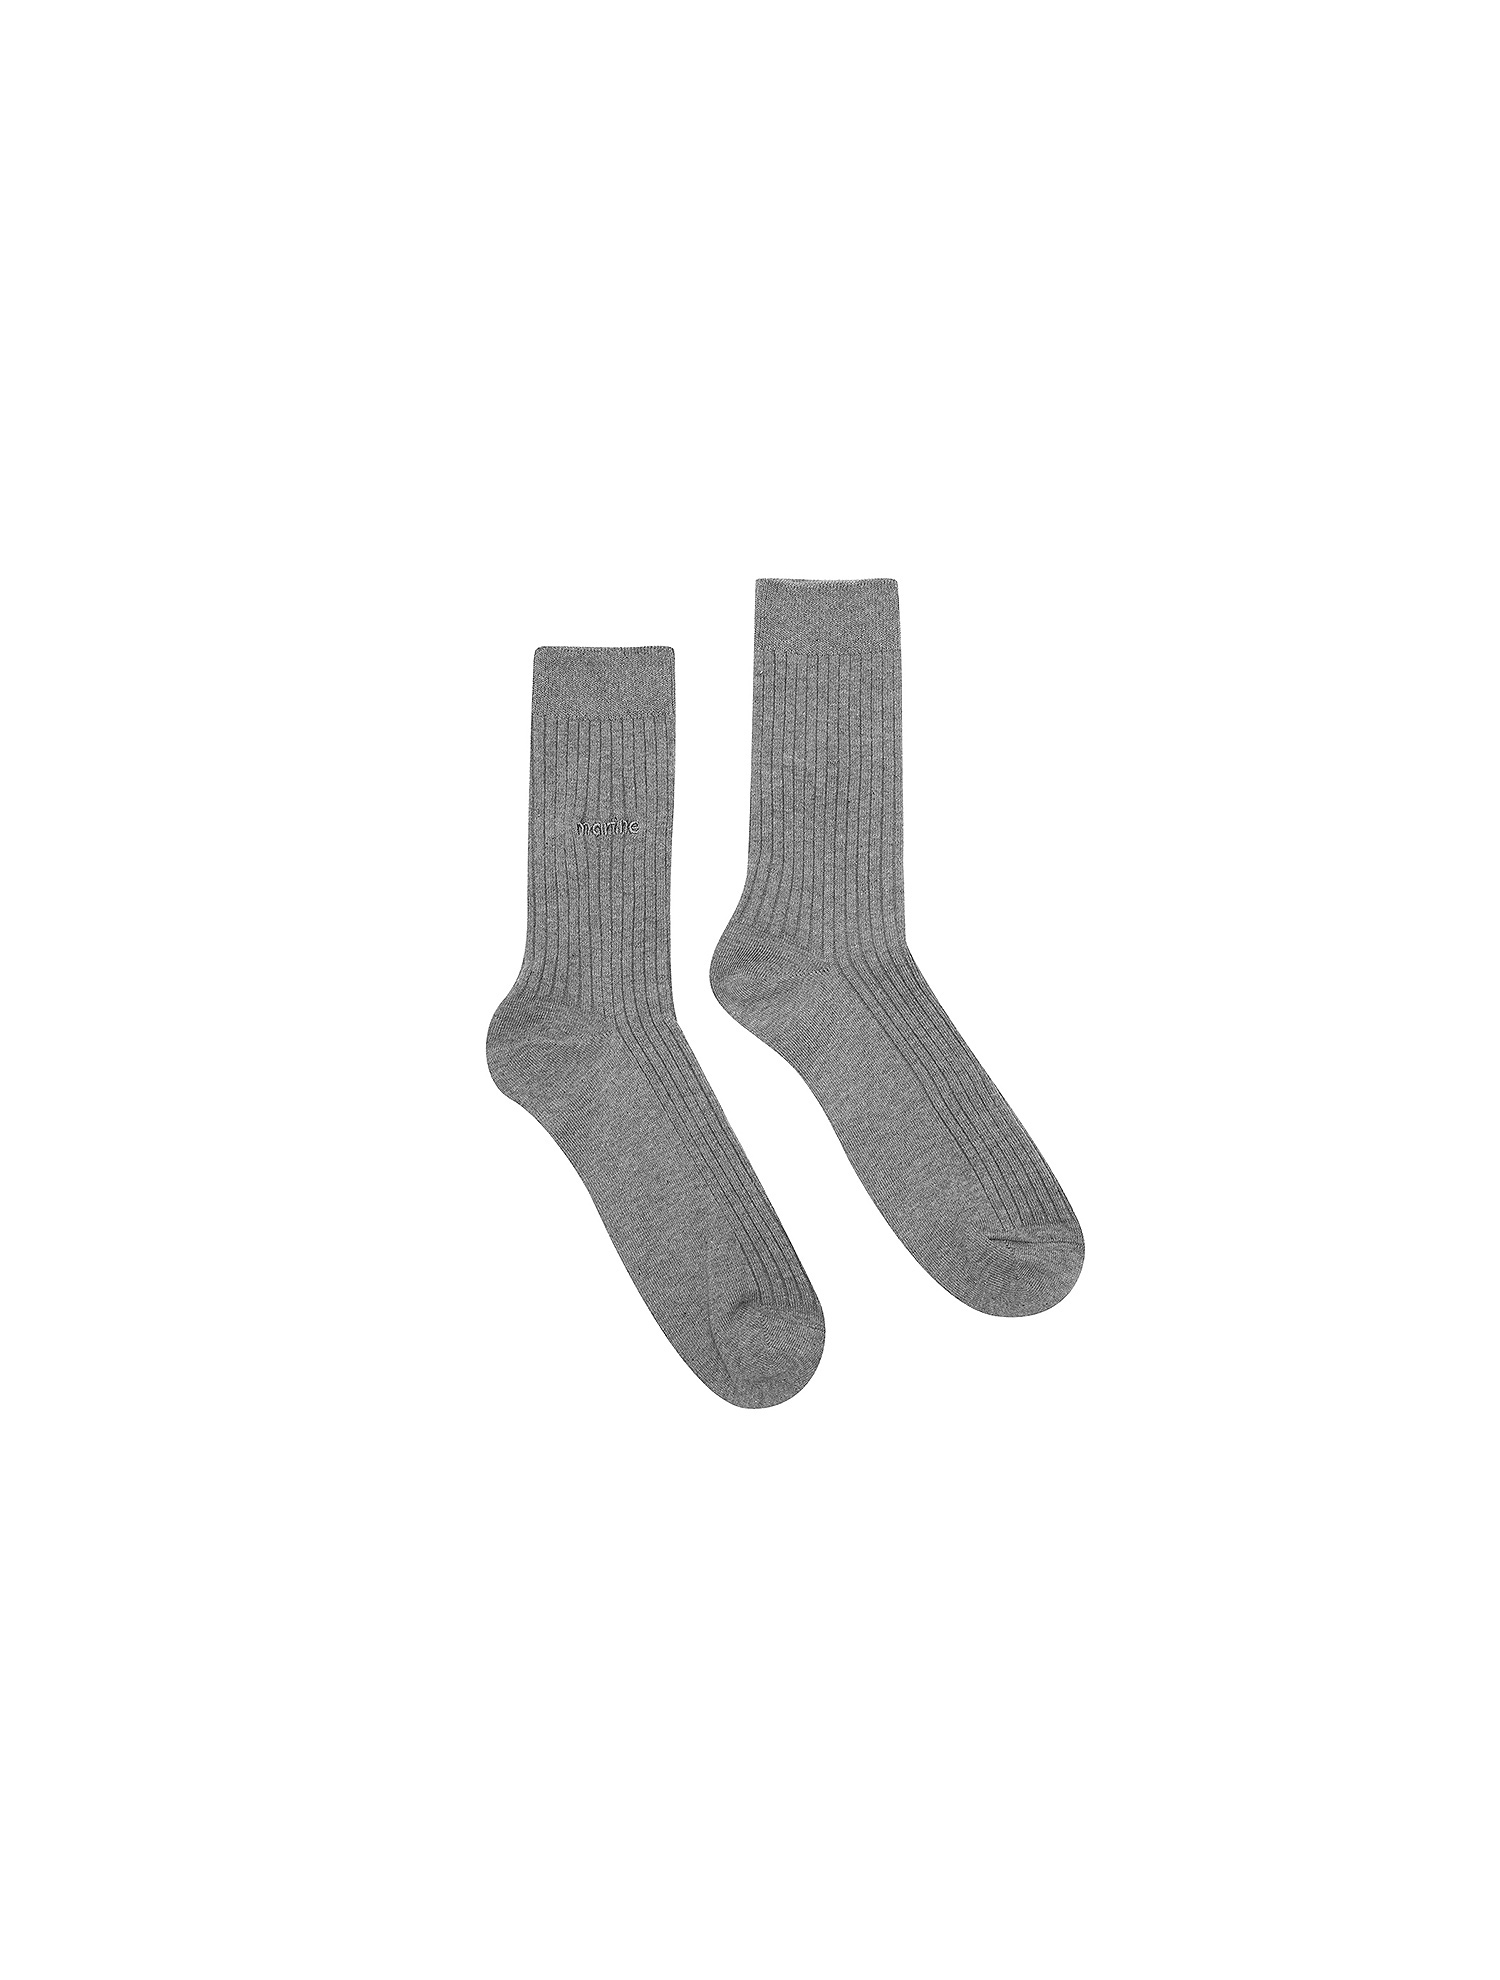 Basic Middle Socks_M/Grey (Men) (QMAESC10736)